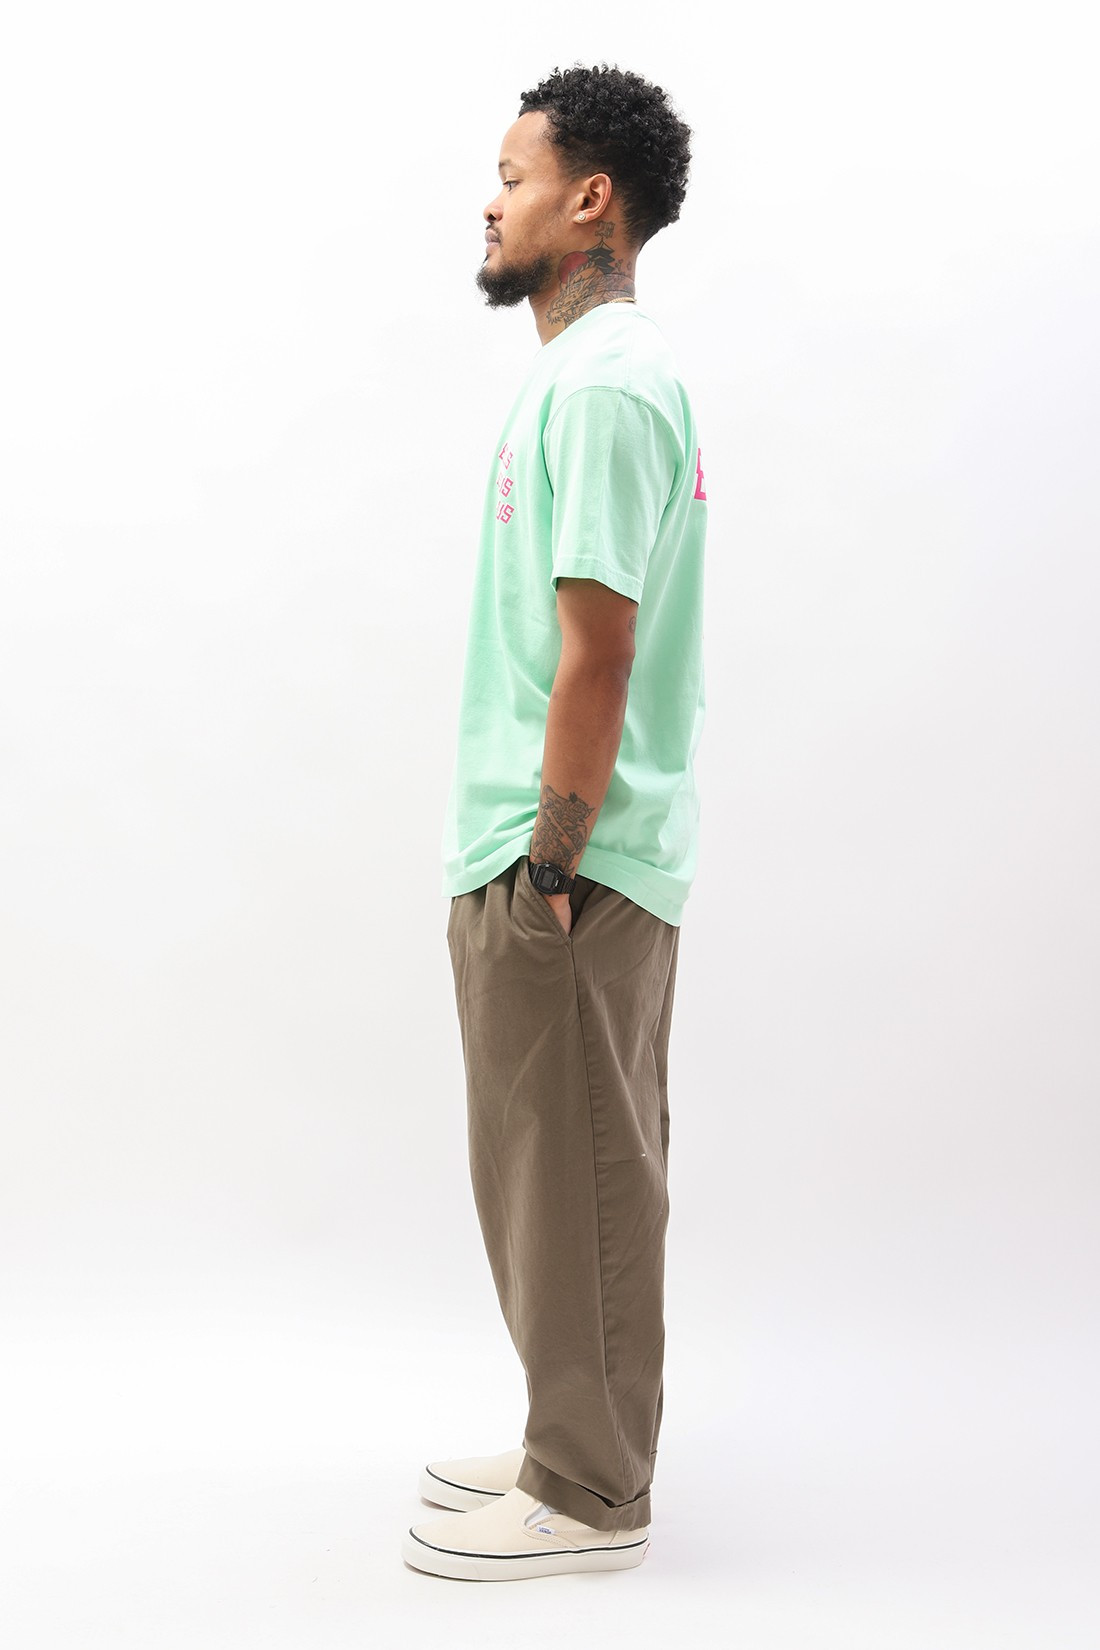 BISOUS SKATEBOARDS / T-shirt bisous x3 back Light green